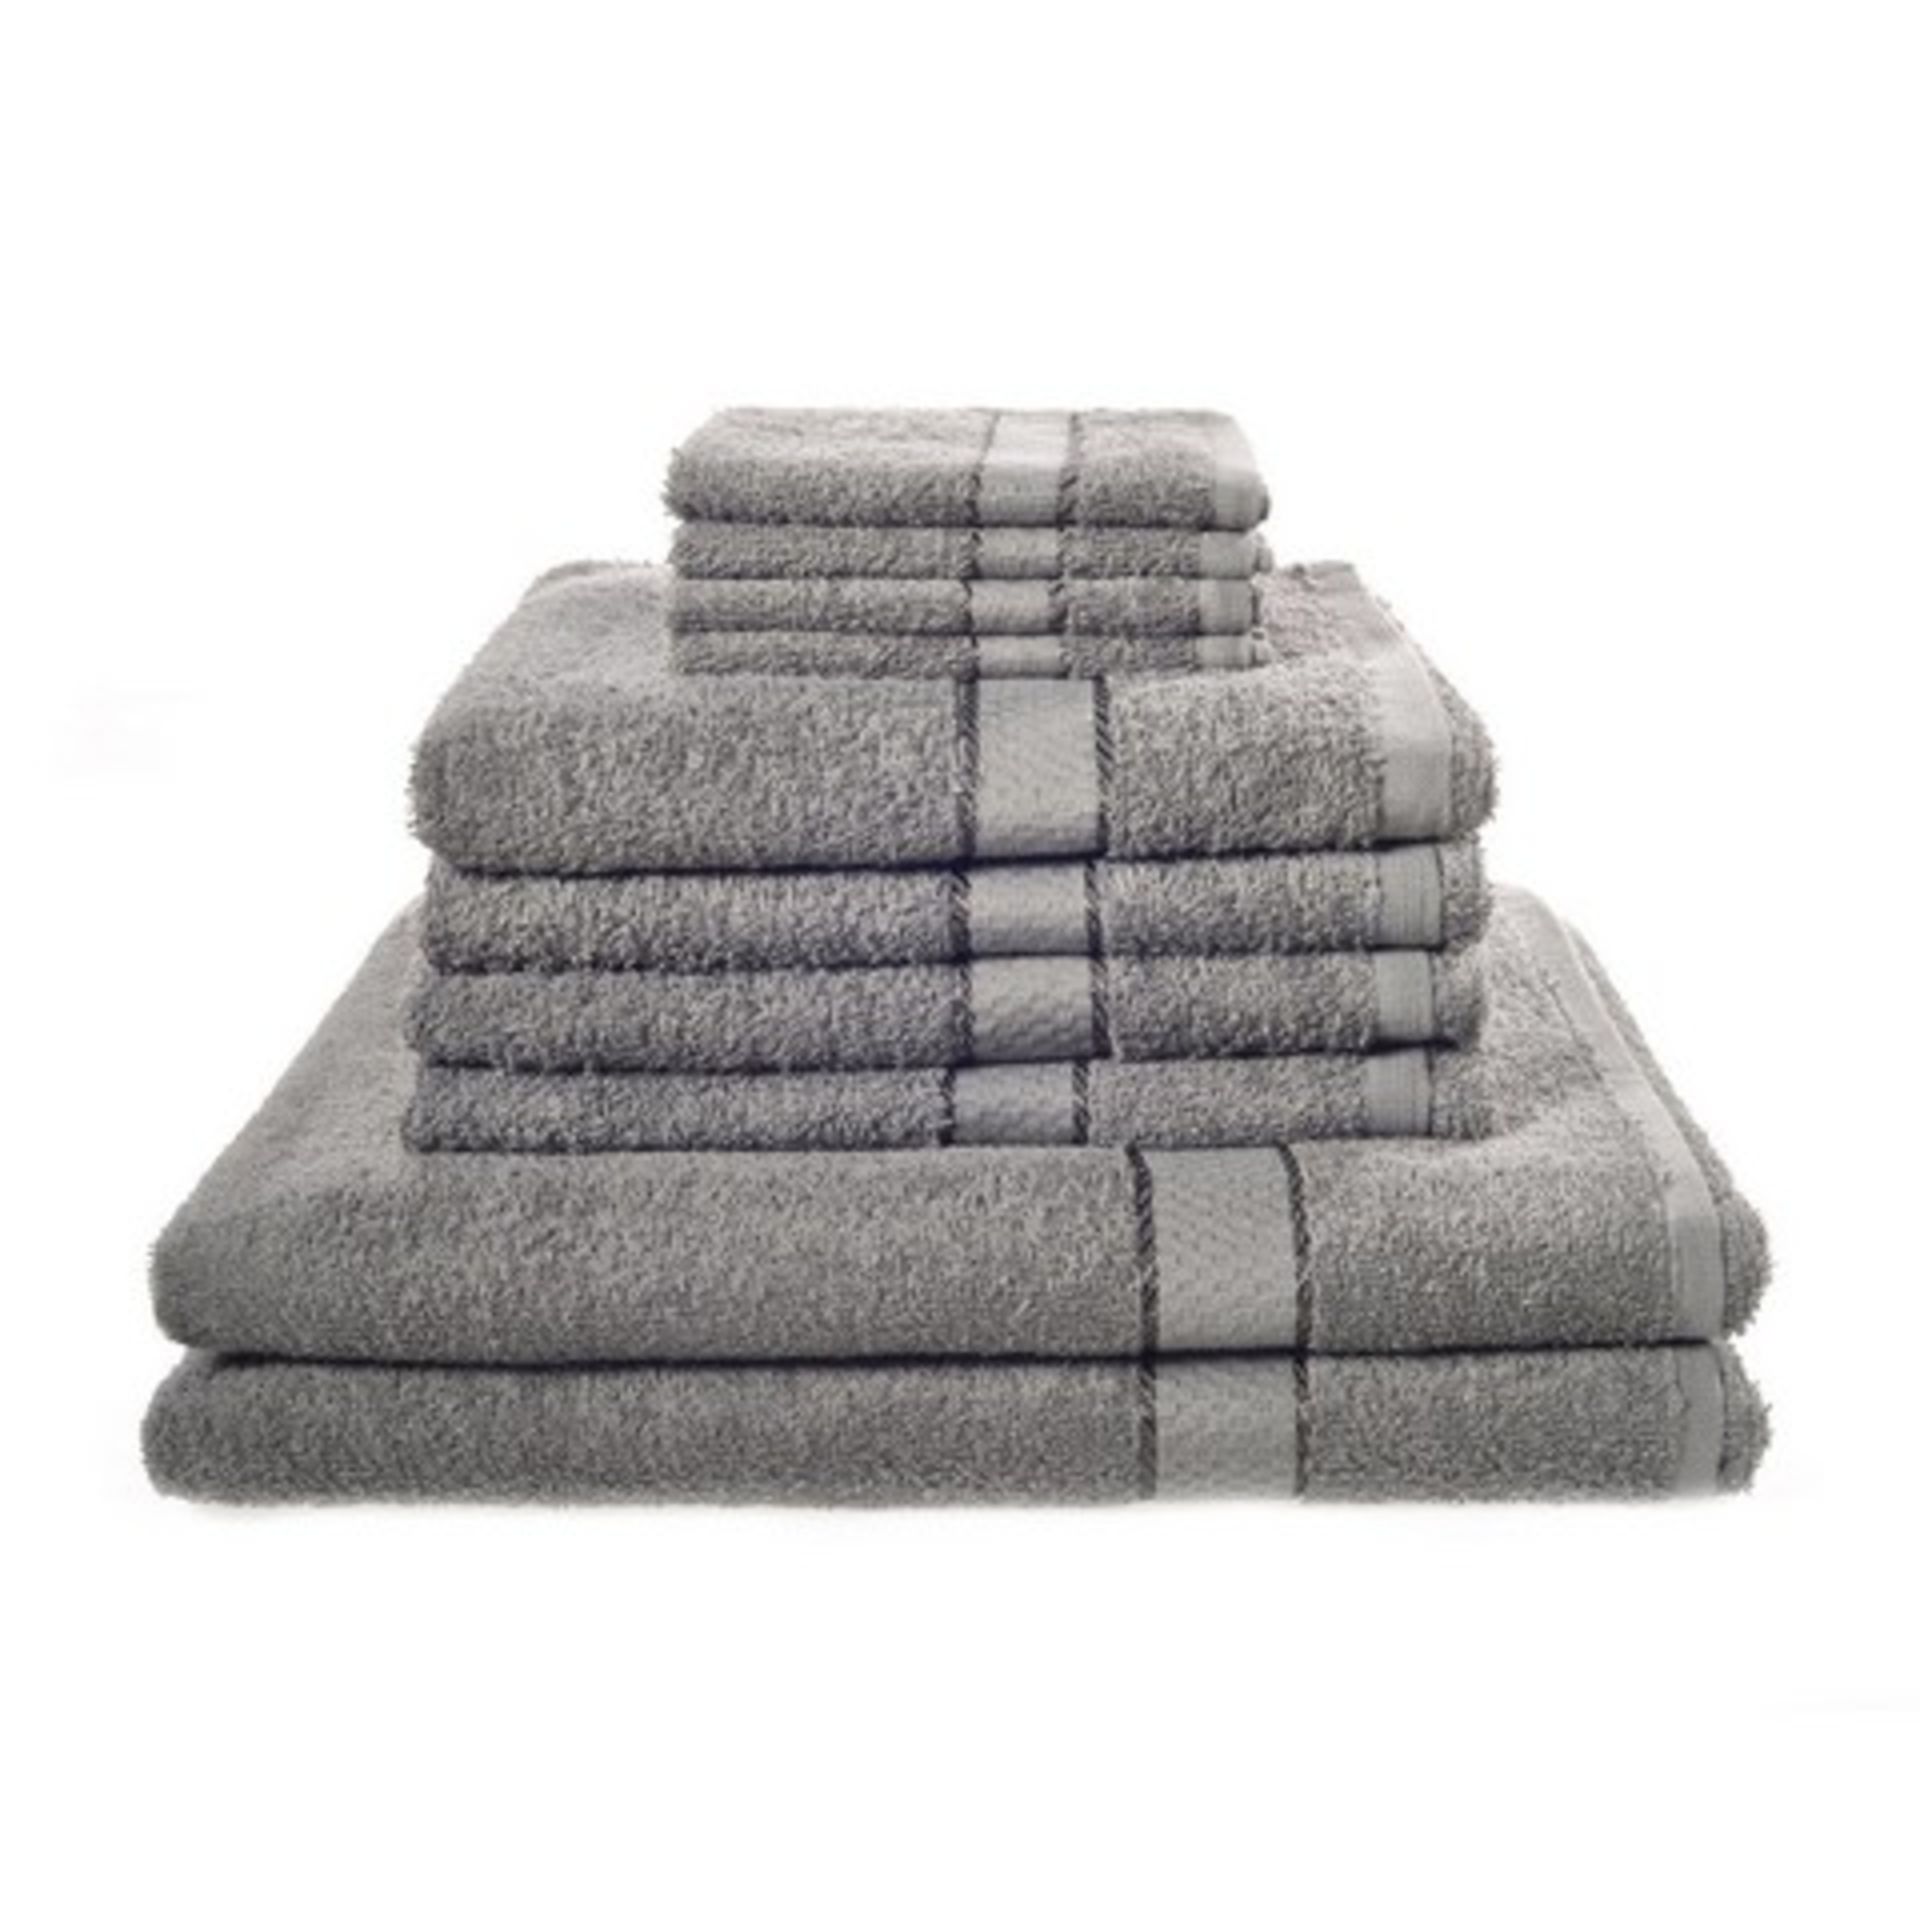 V Brand New Luxury 10 Piece Silver Towel Bale Set - 4 x Face Cloths - 4 x Hand Towels - 2 Bath